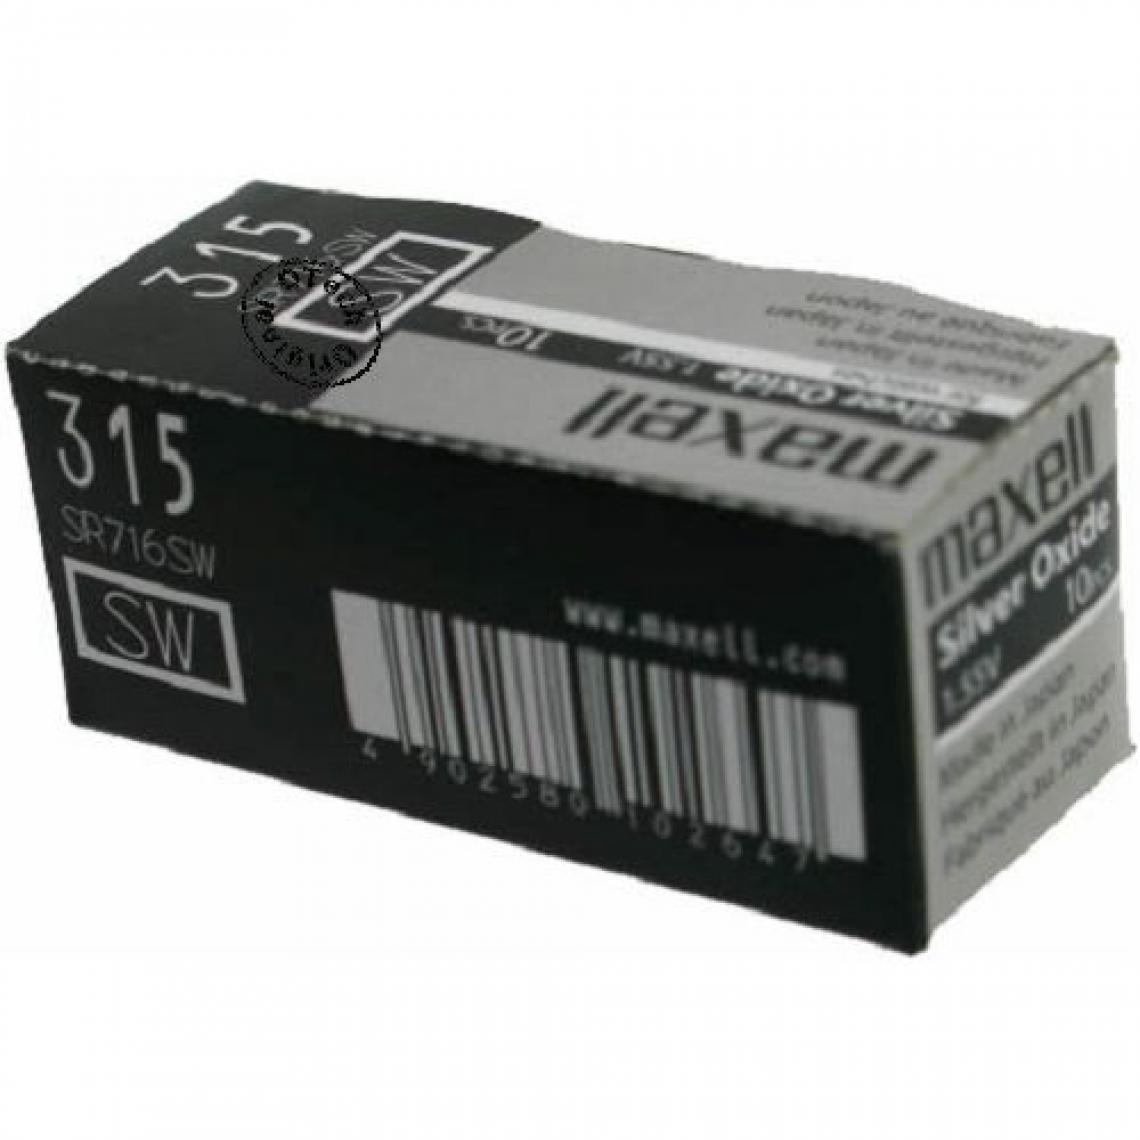 Otech - Pack de 10 piles maxell pour MAXELL SR716SW - Piles rechargeables